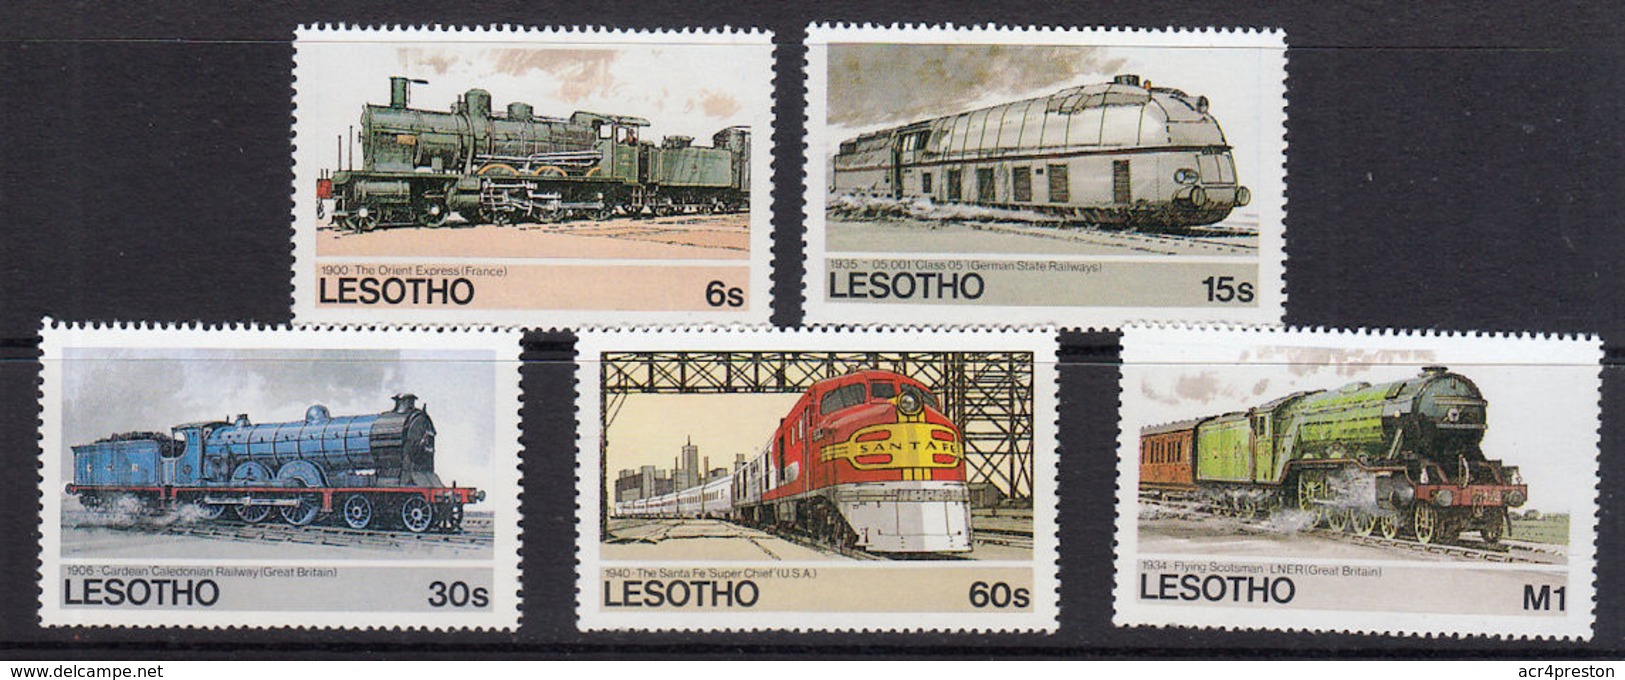 A1006 LESOTHO 1984,  SG 605-9  Railways Of The World, Locomotives,  MNH - Lesotho (1966-...)